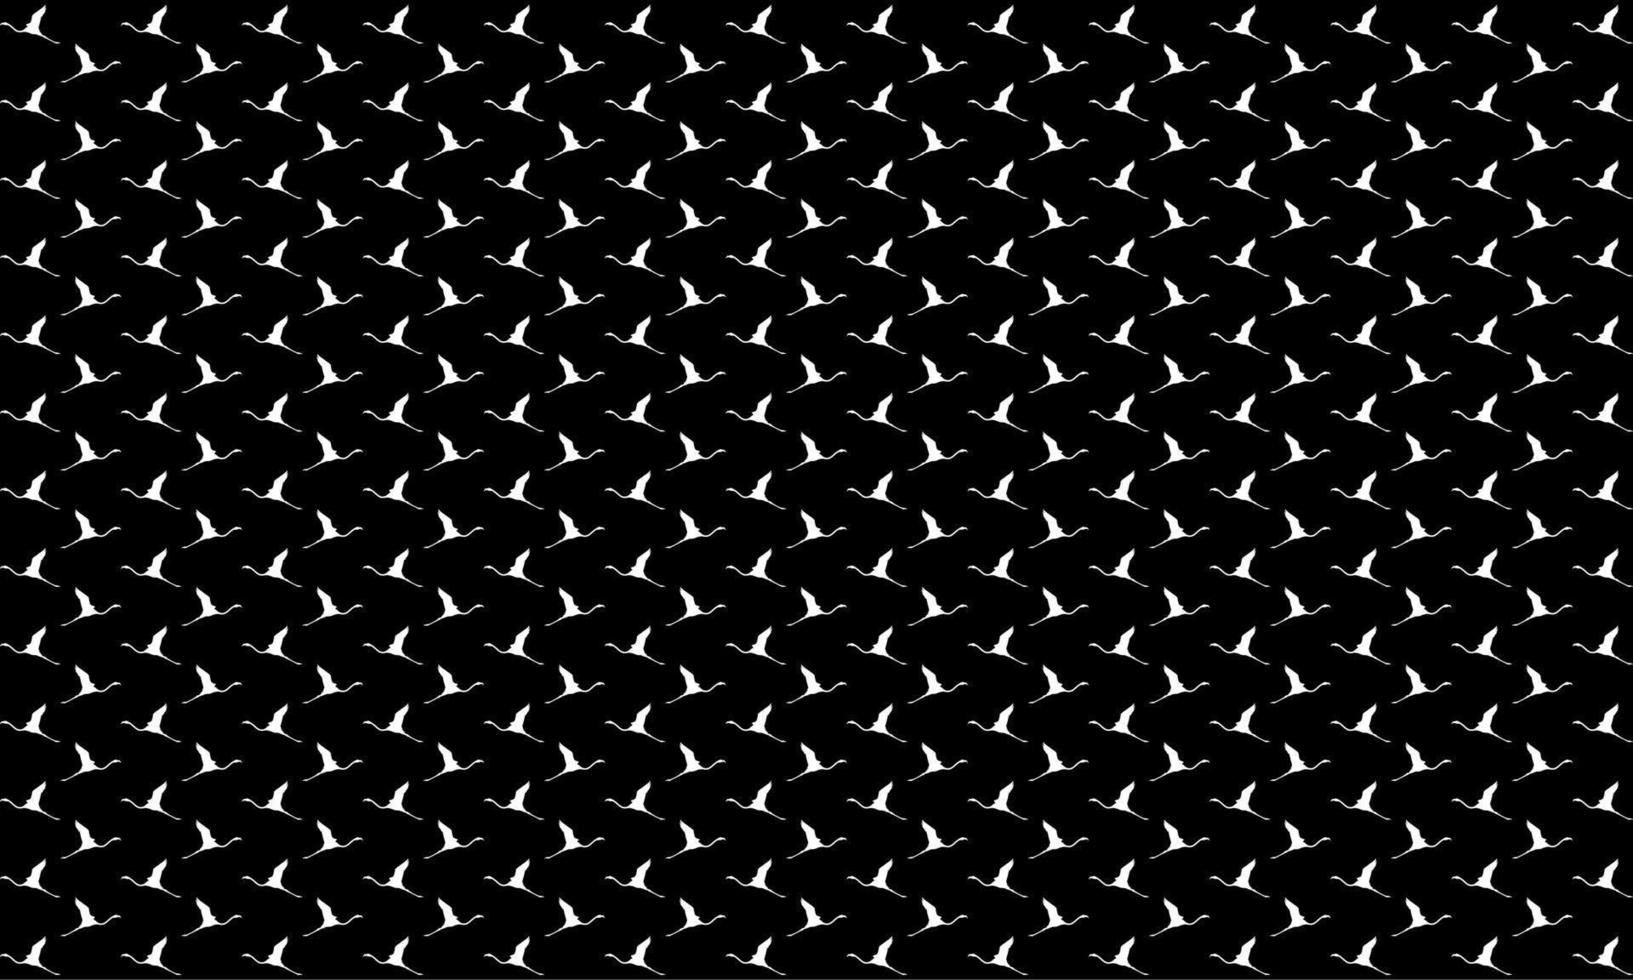 patrón de motivos de pájaro flamenco volador. decoración contemporánea para interiores, exteriores, alfombras, textiles, prendas de vestir, telas, seda, azulejos, plástico, papel, envoltura, papel tapiz, almohada, sofá, fondo, etc. vector